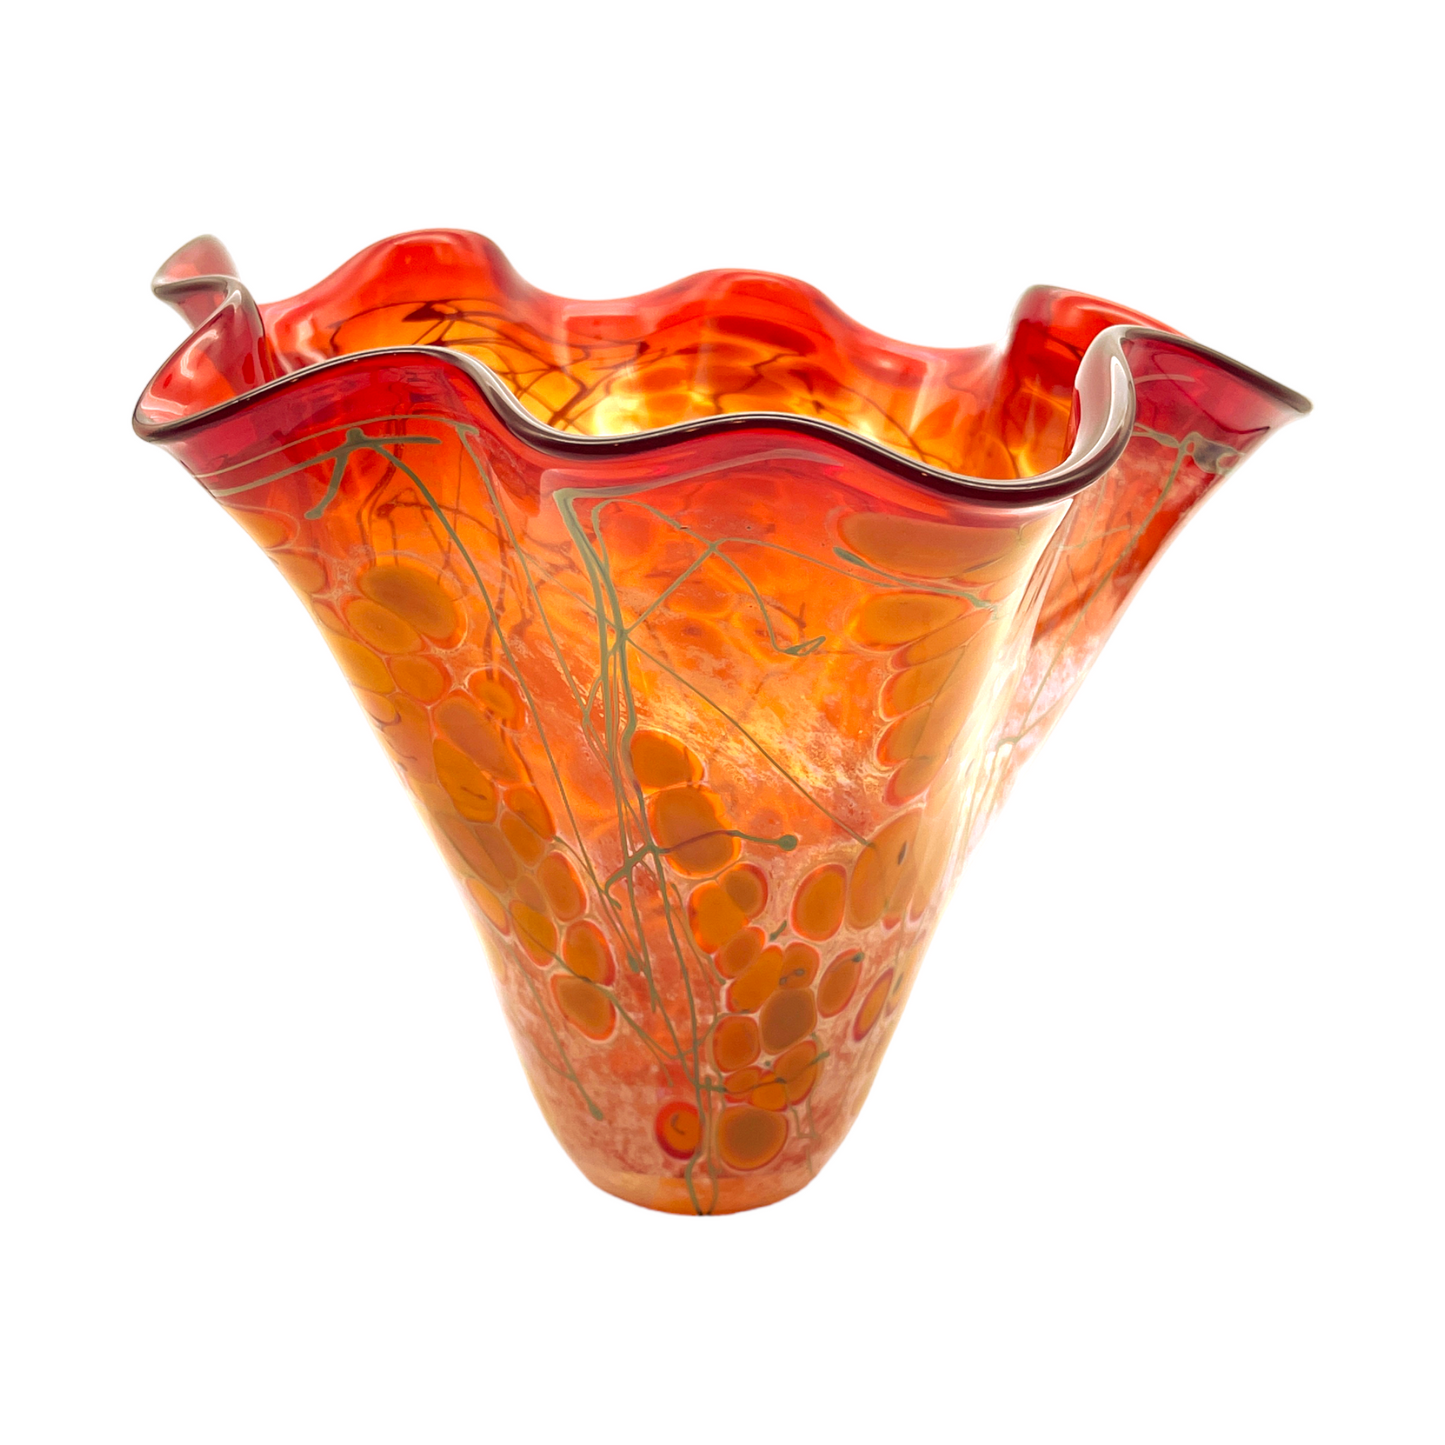 Ethereal Elegance: The Signature Handkerchief Vase by Paul Bendzunas